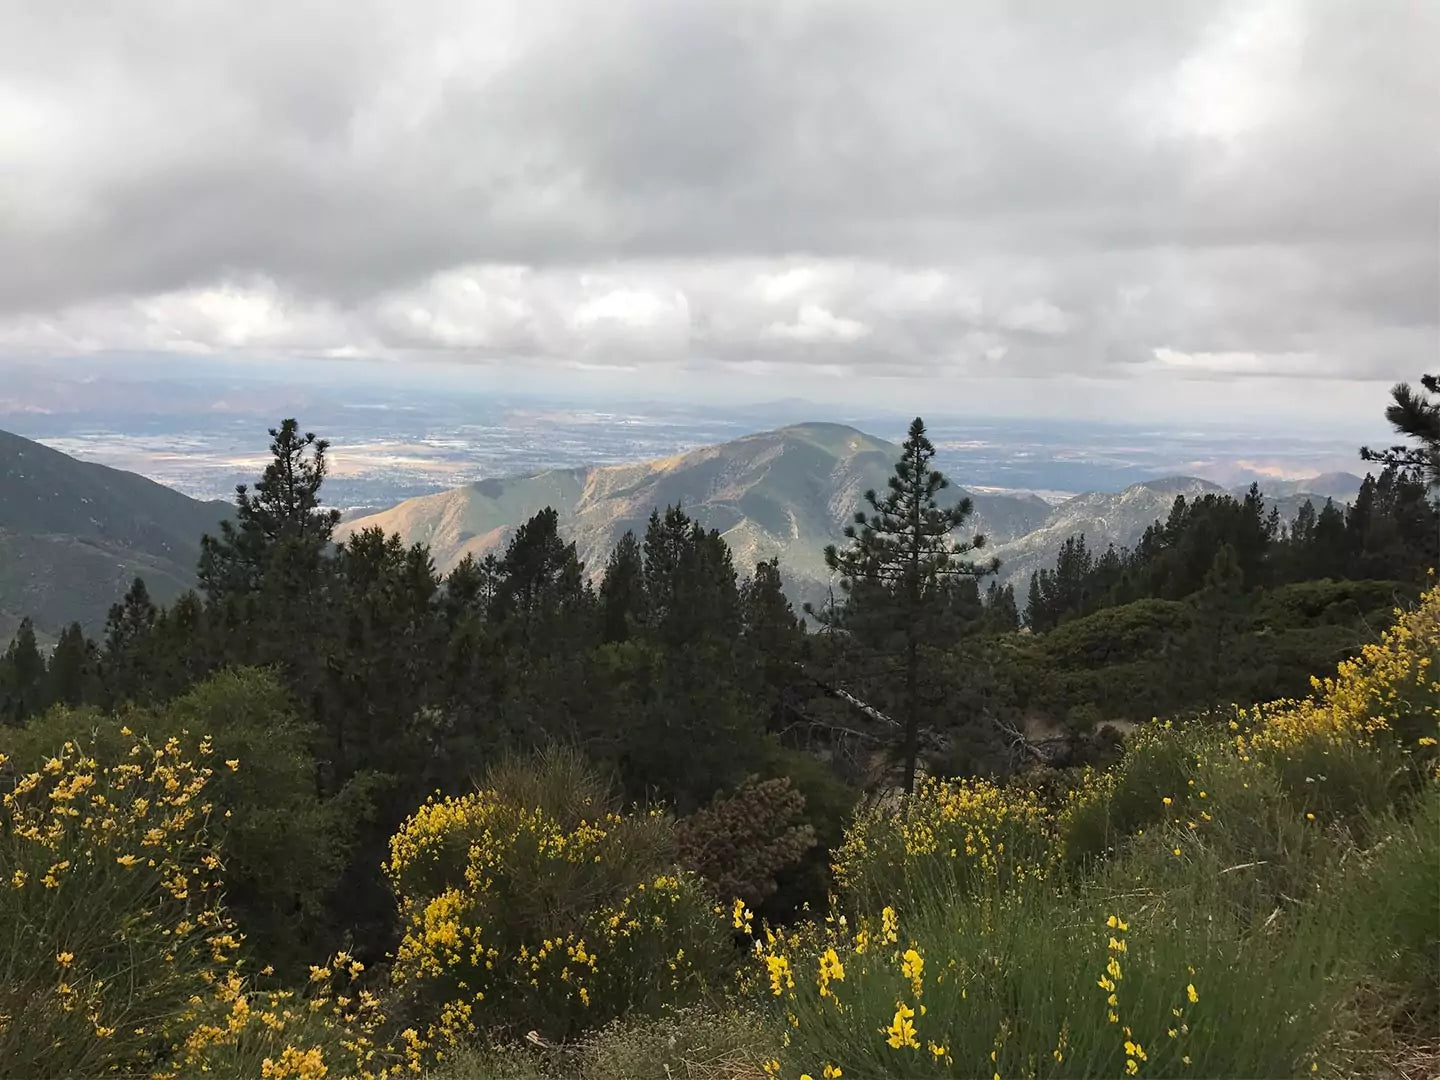 A picture overlooking the San Bernardino mountains